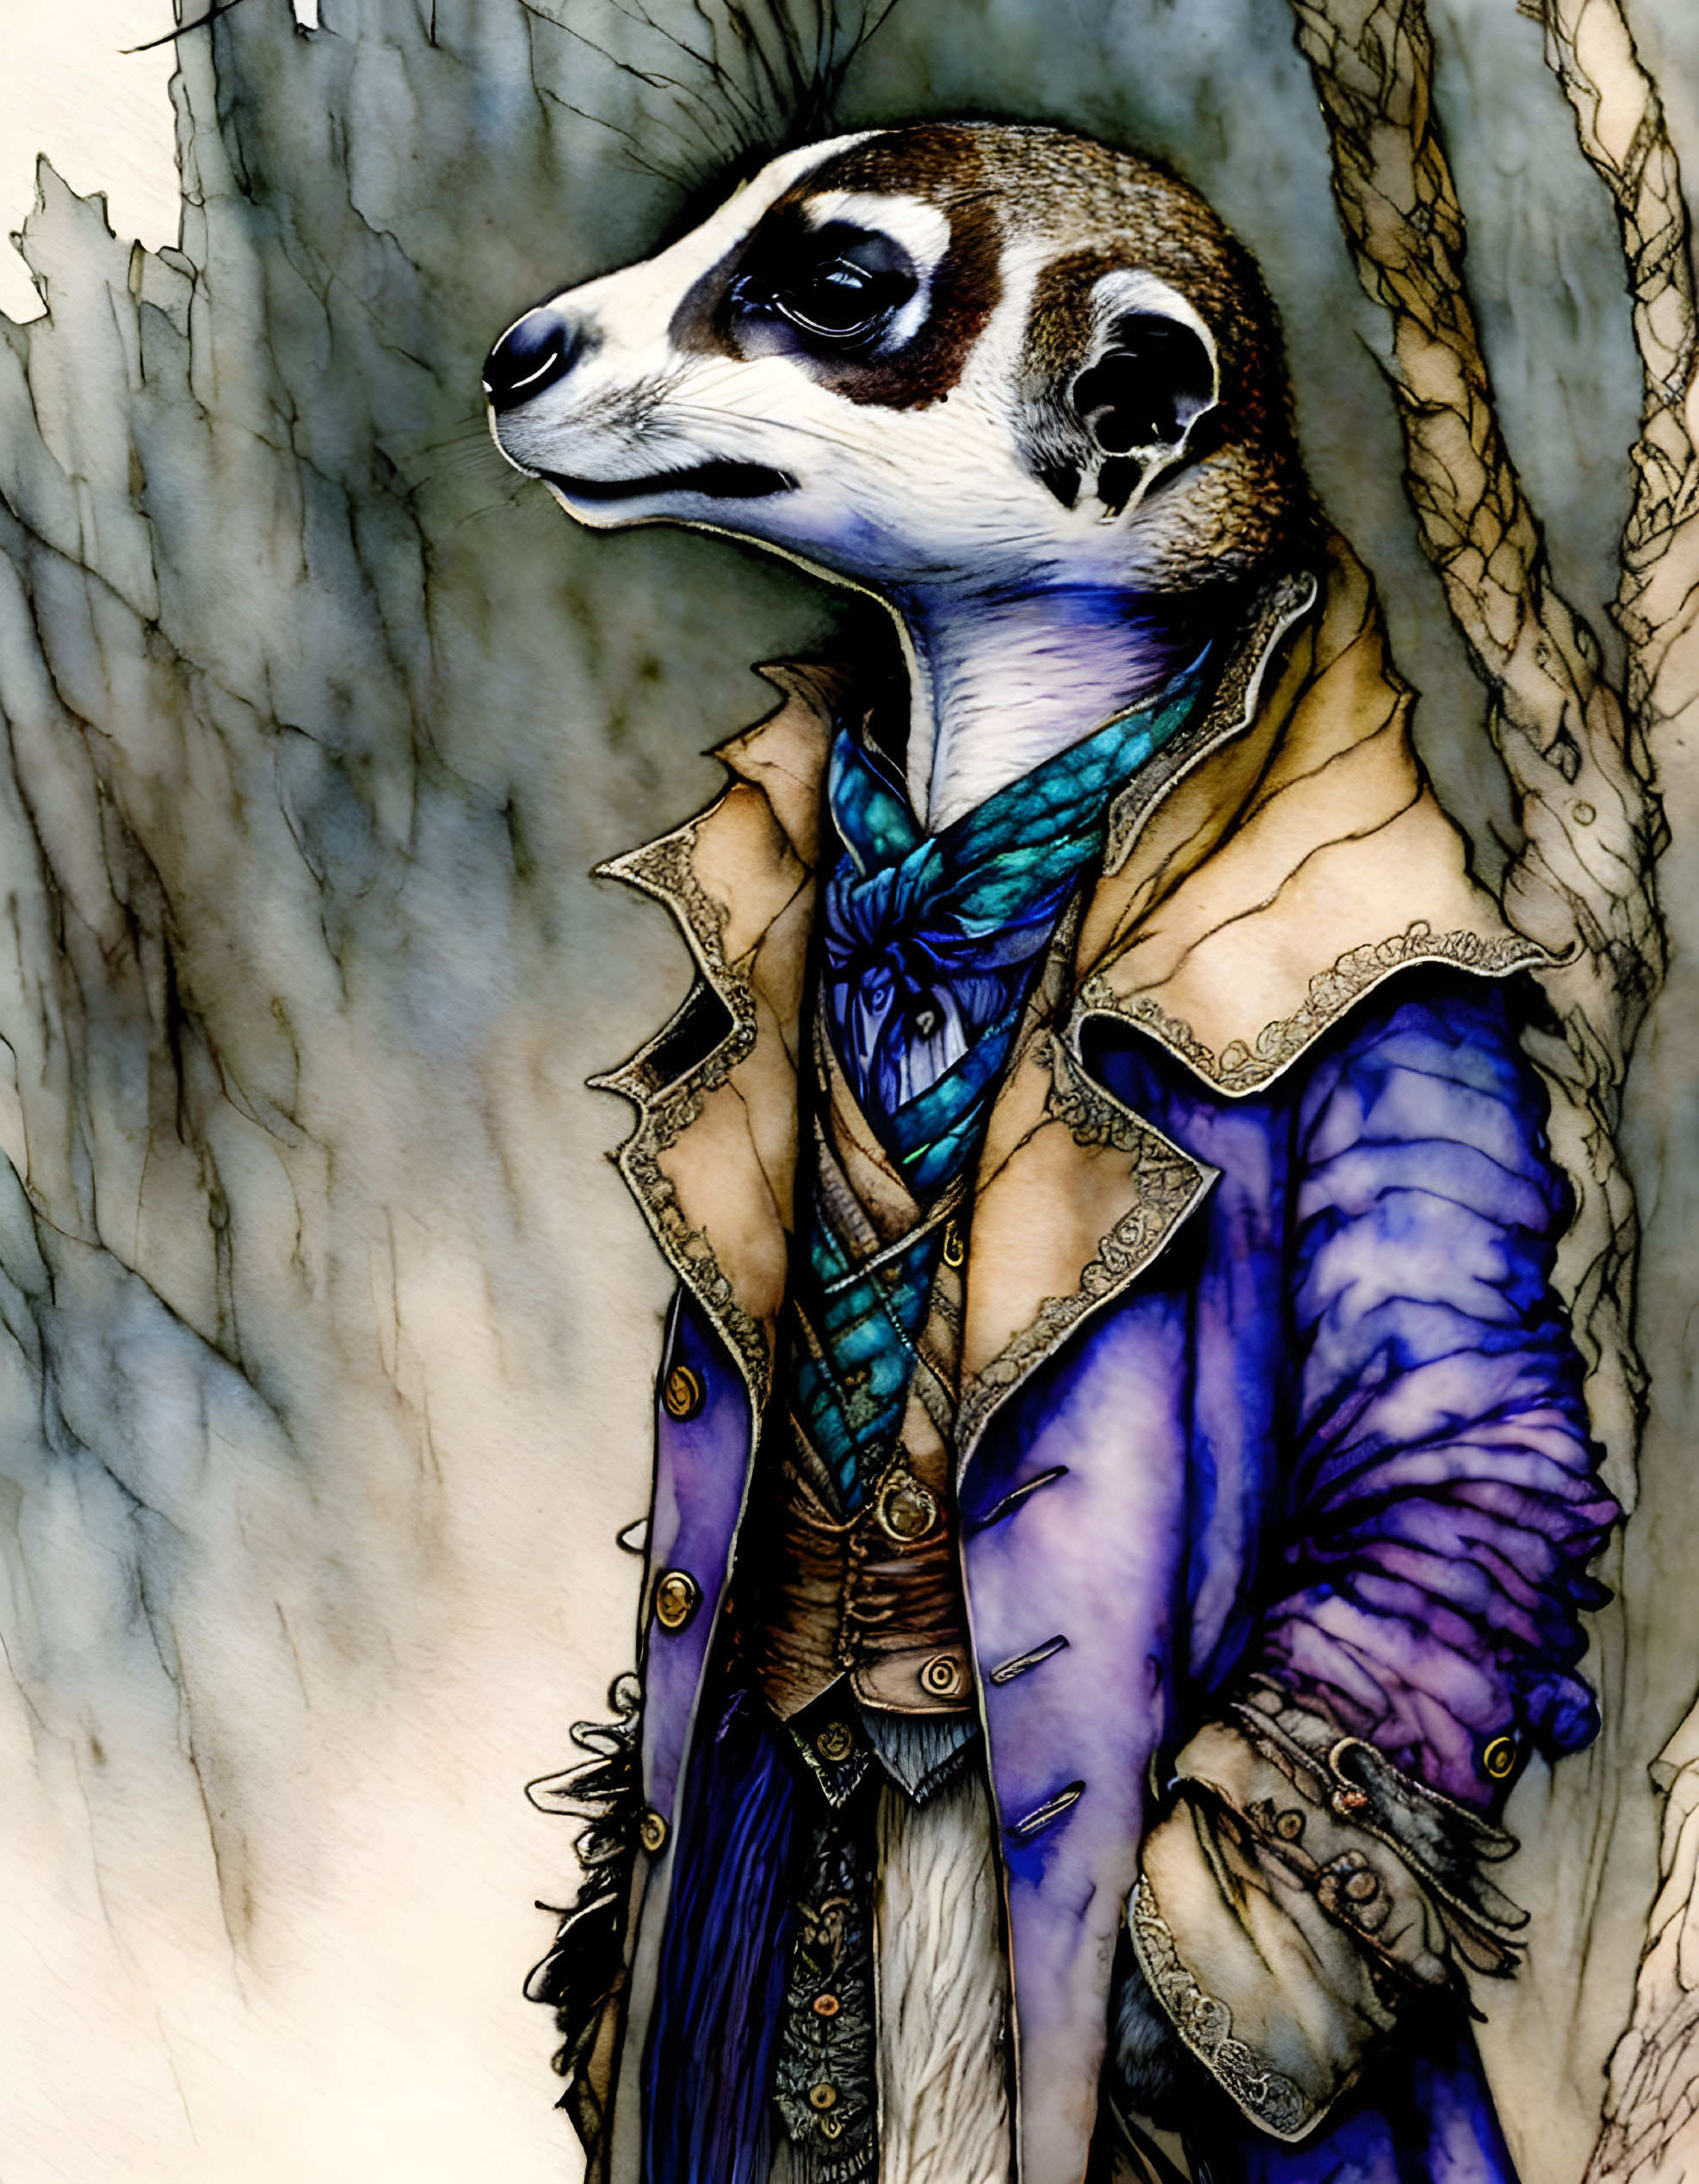 Stylish anthropomorphic meerkat in intricate period coat